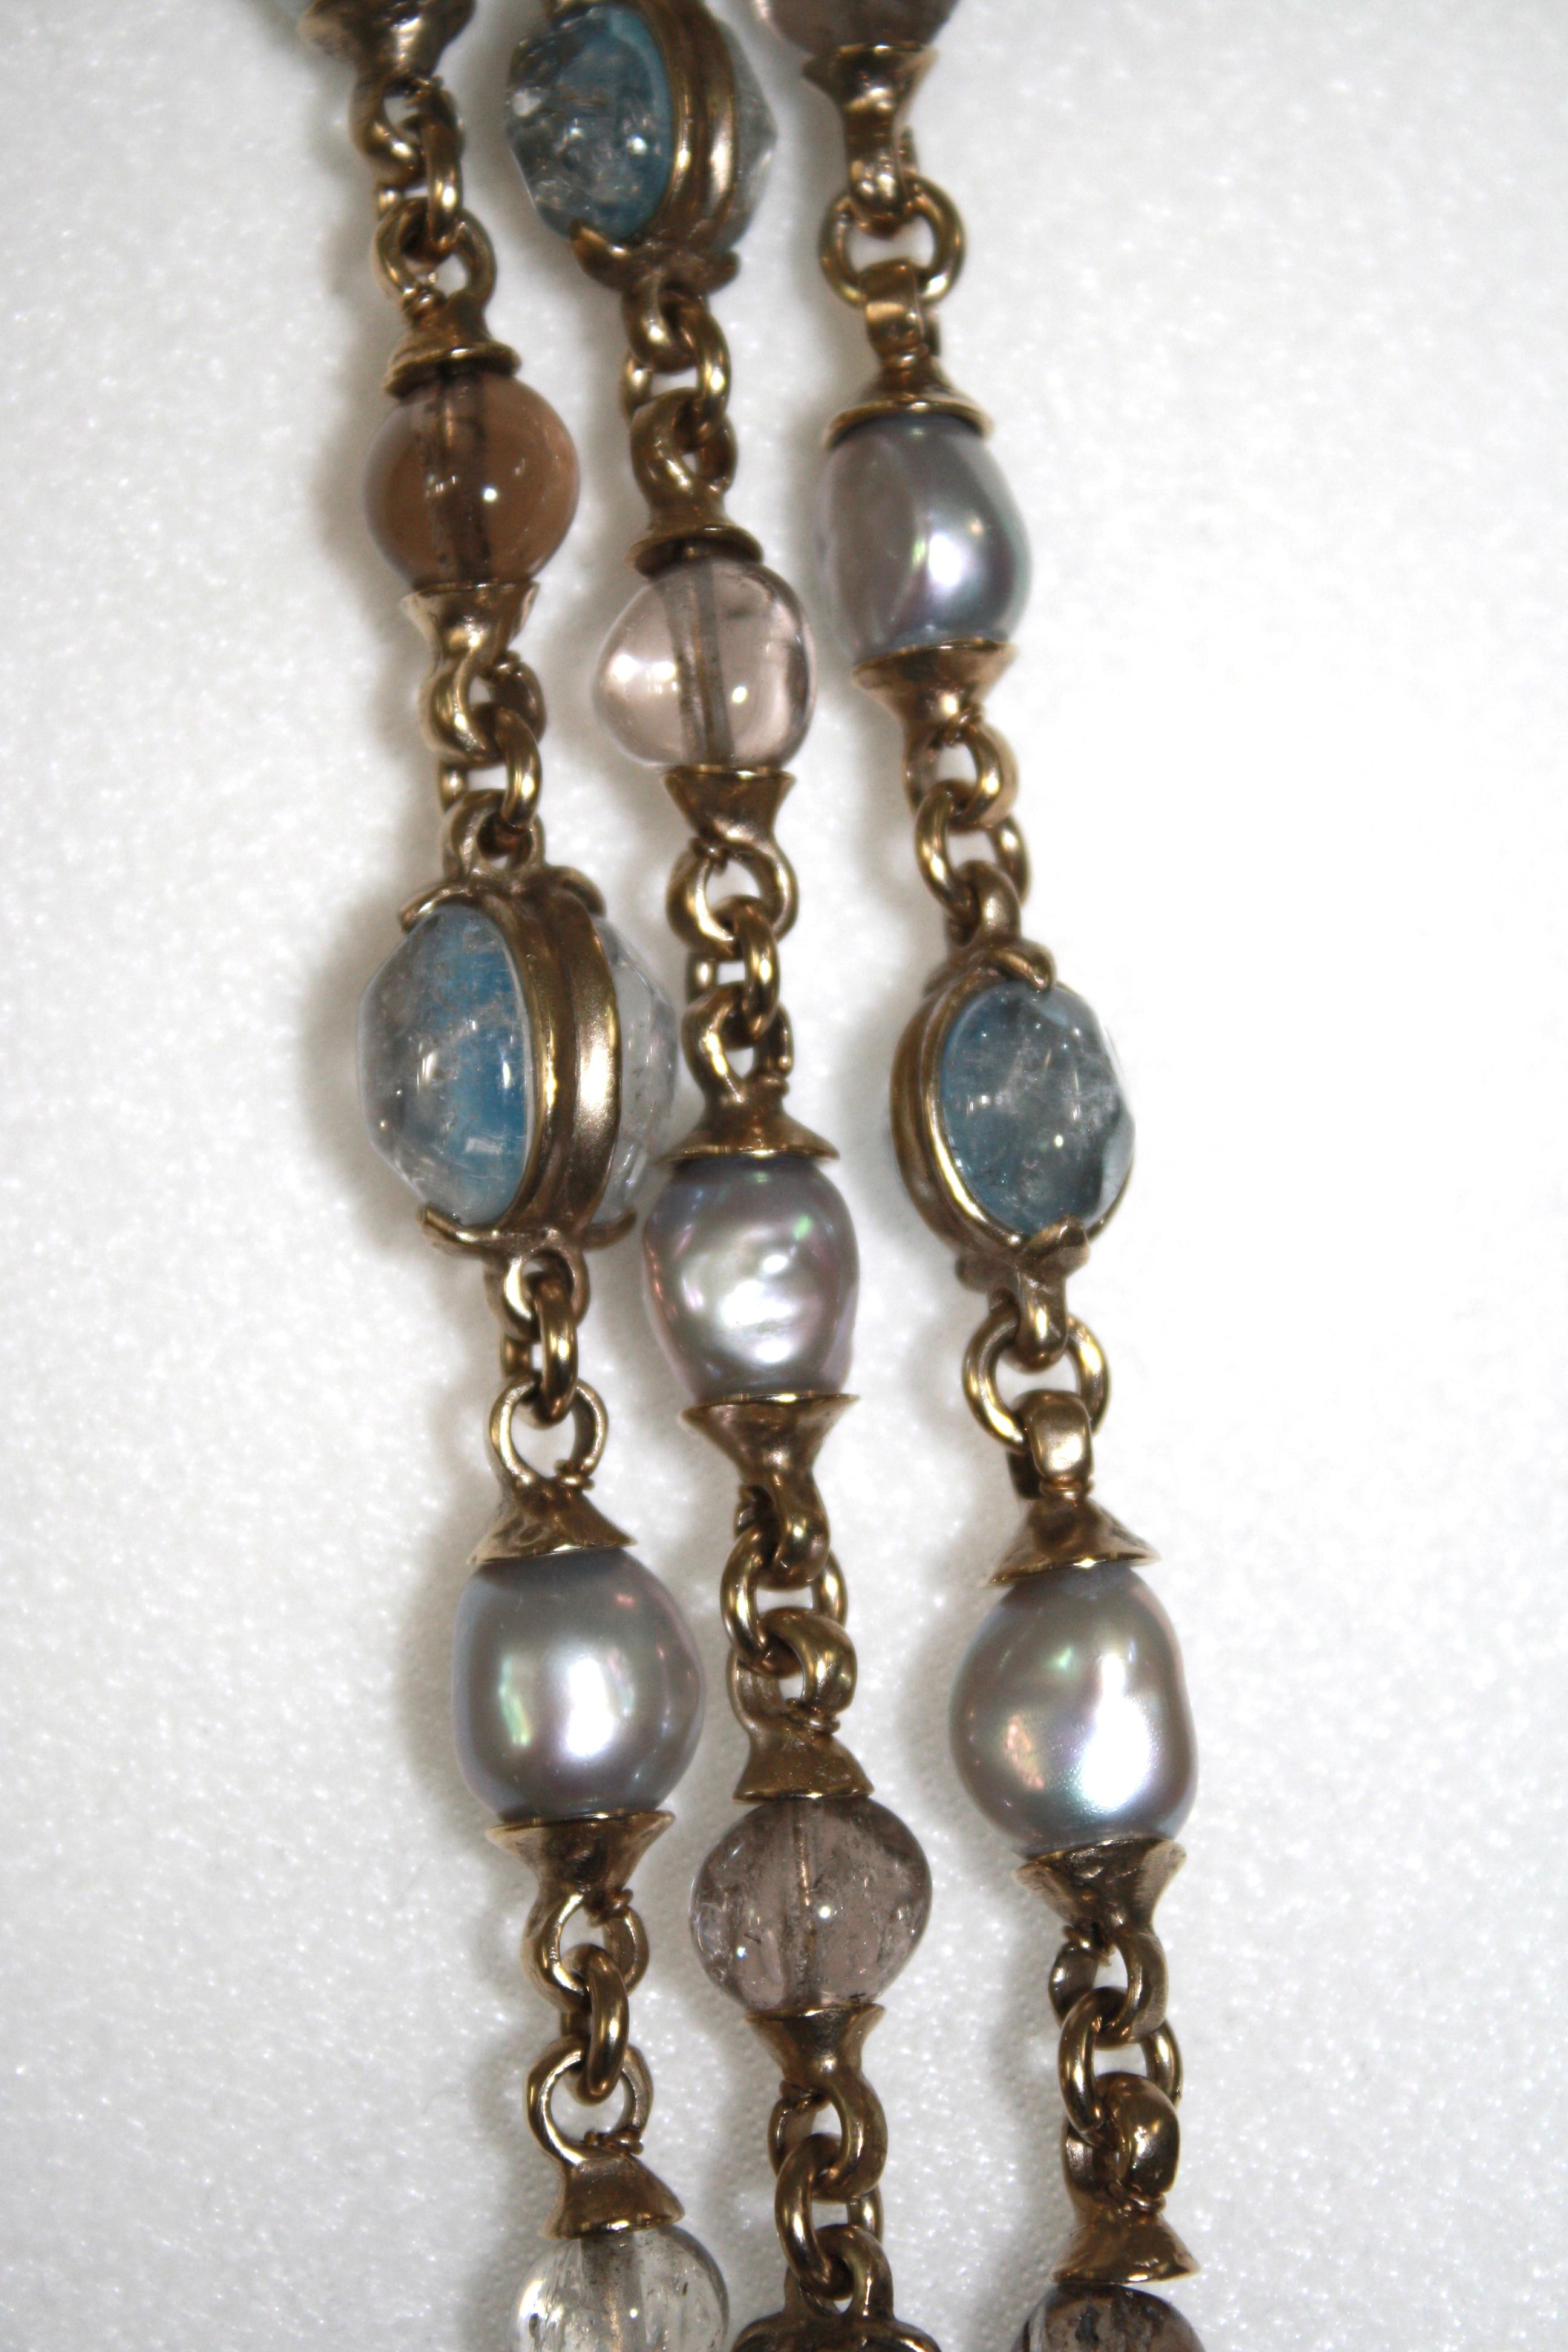 strand of pearls vs pale oak